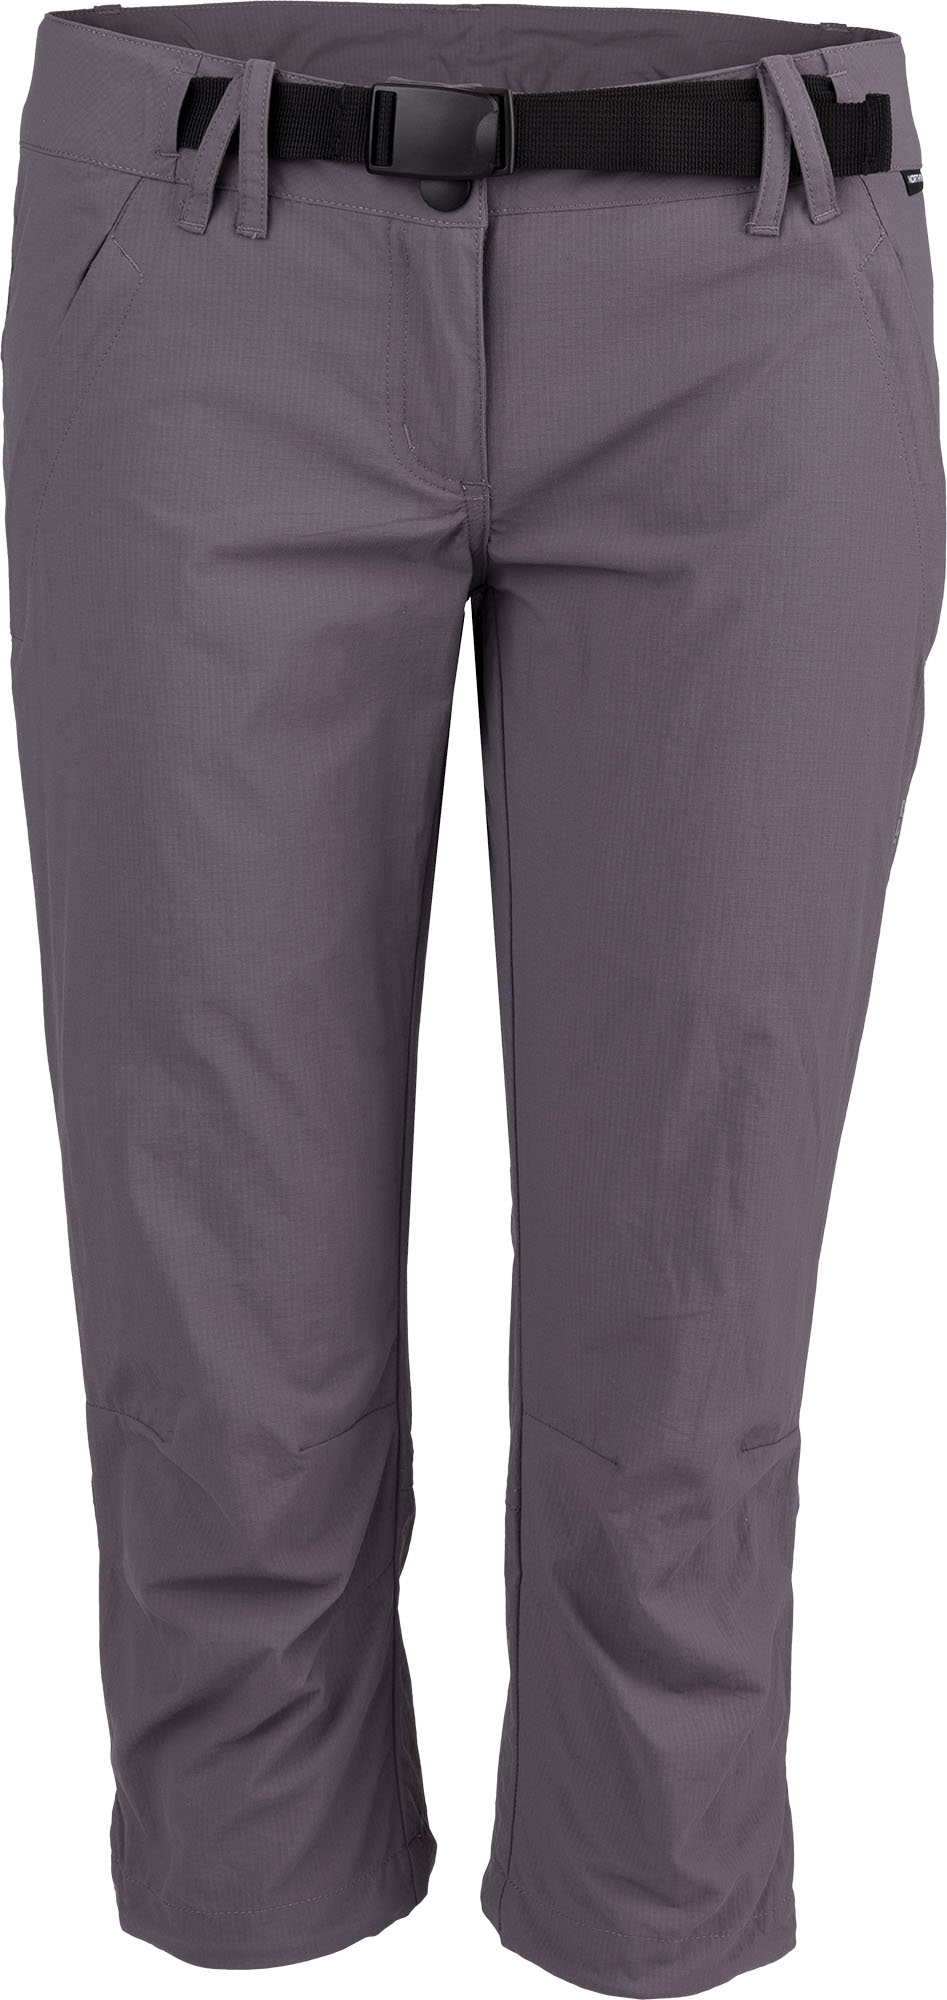 Women's 3/4 length trousers